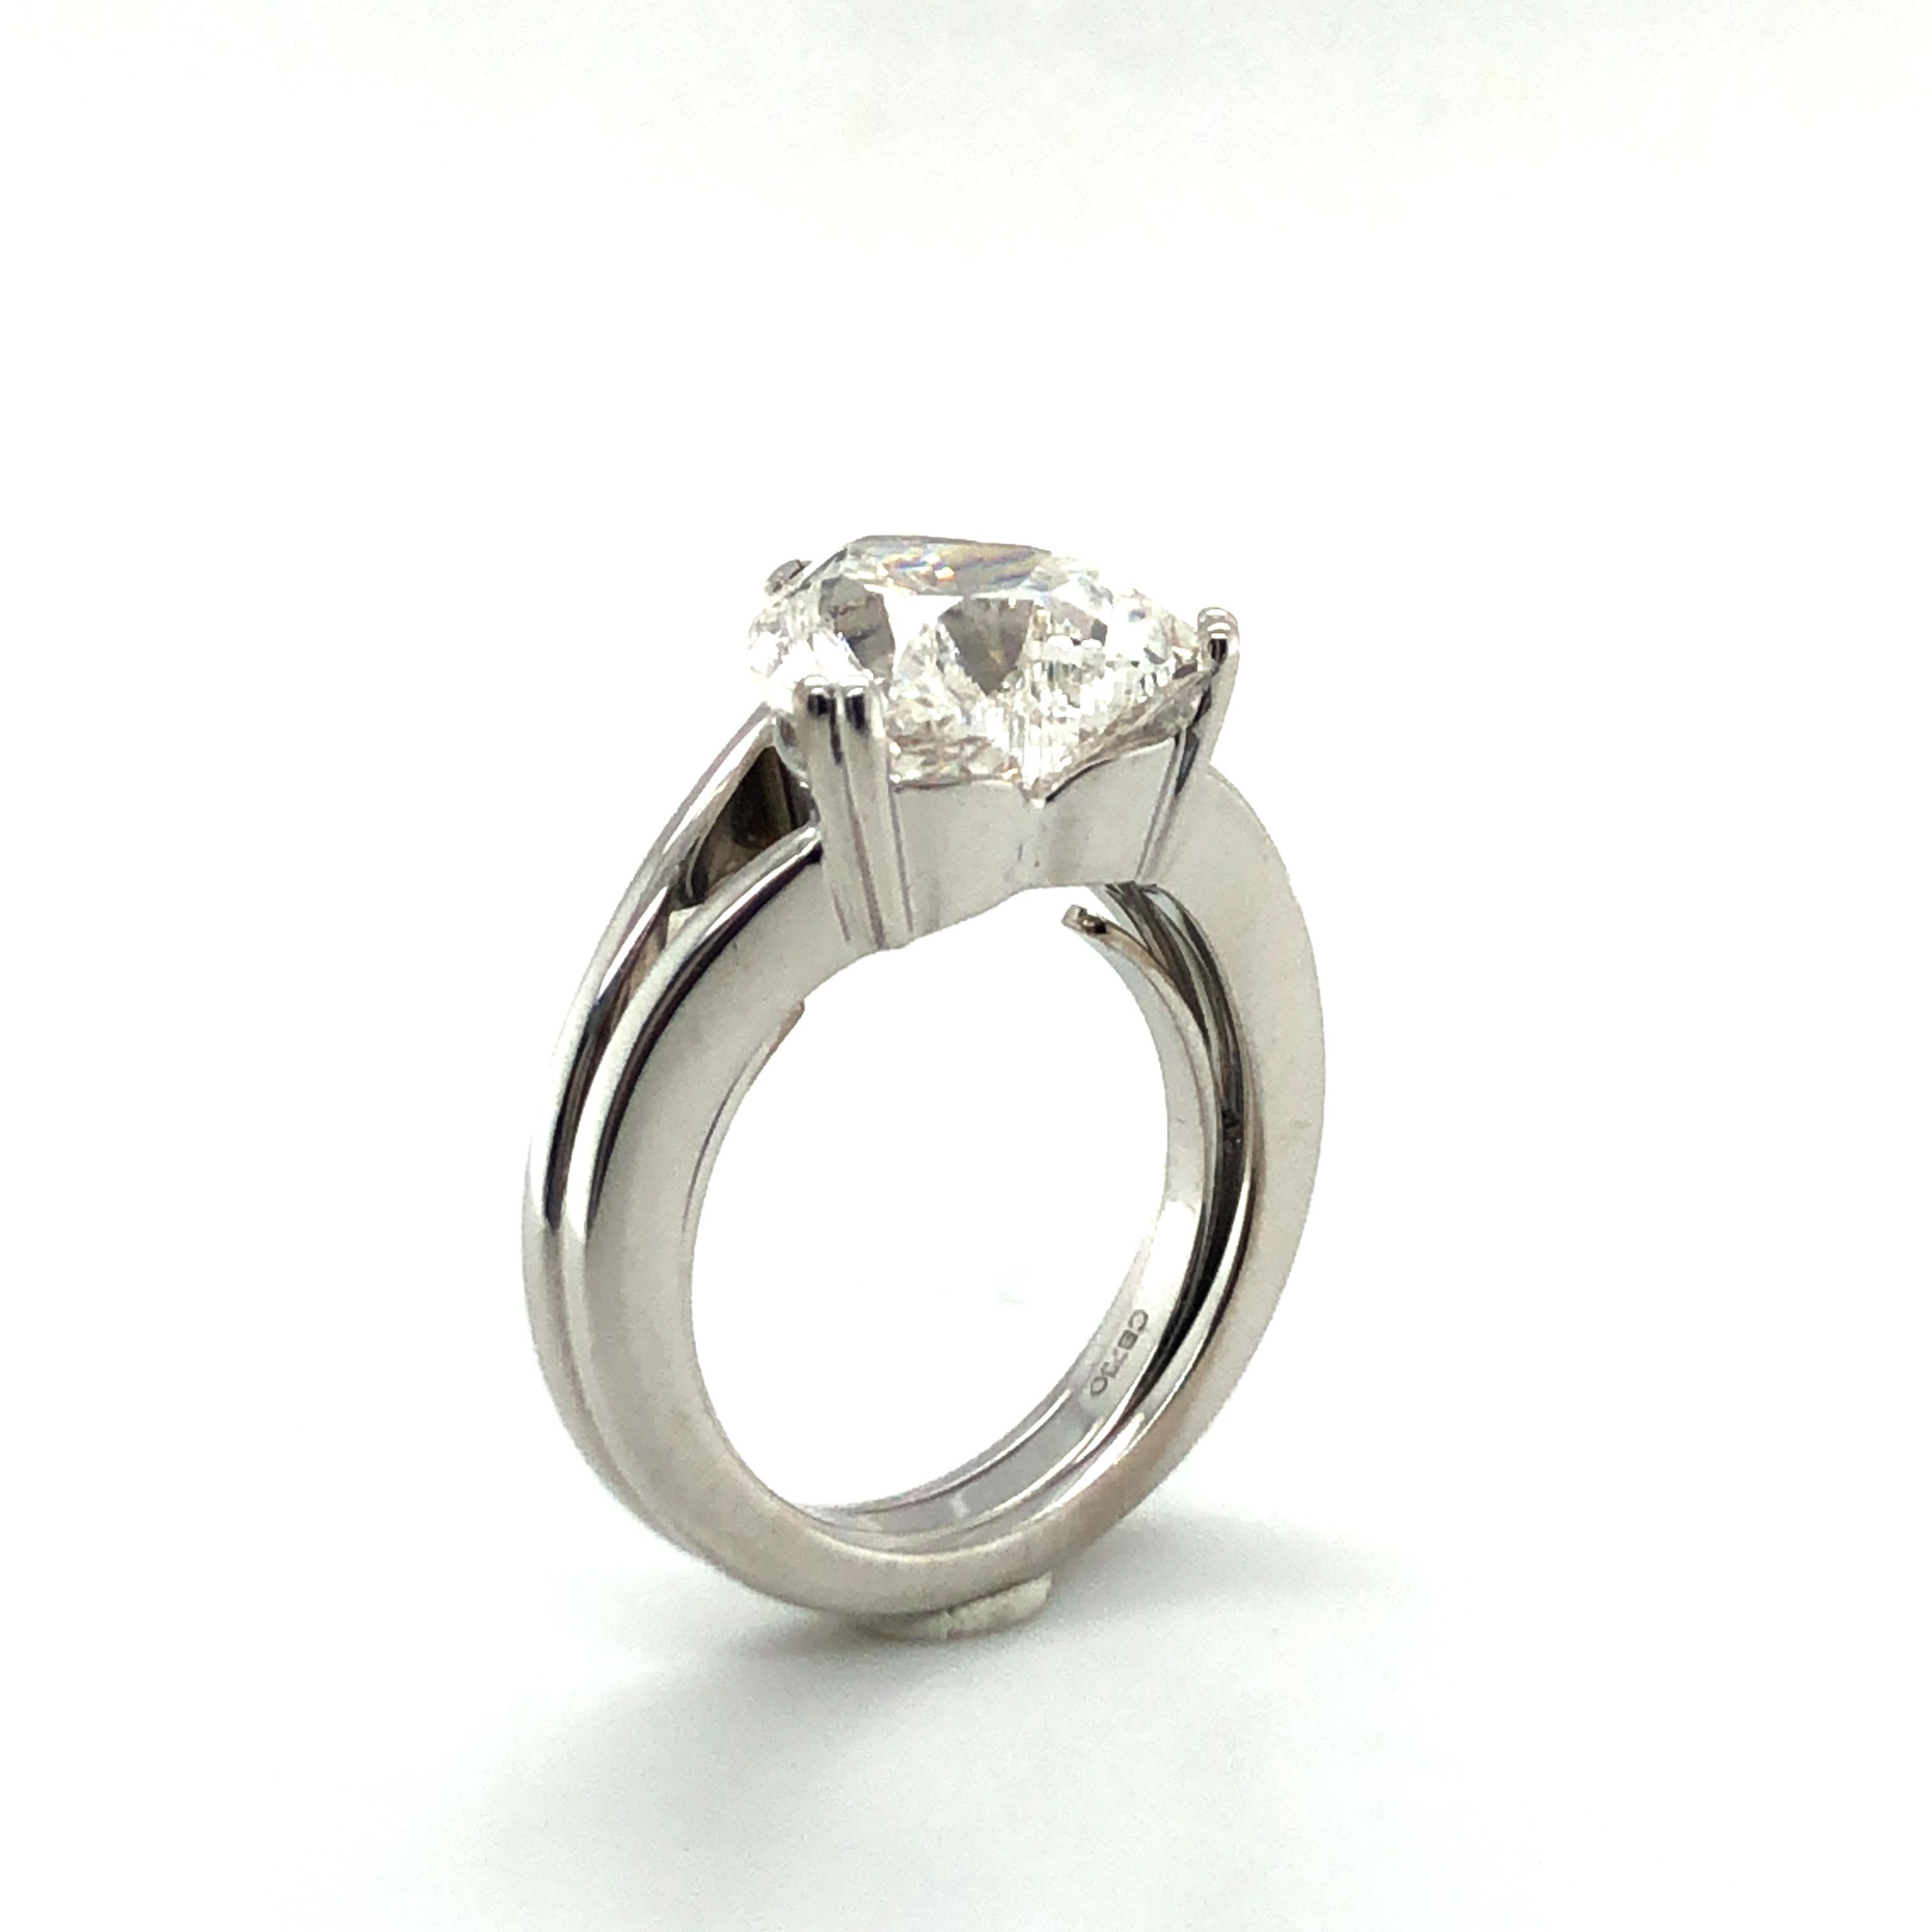 Contemporary GIA Certified 5.04 Carat Heart-Shaped Diamond Ring in 18 Karat White Gold